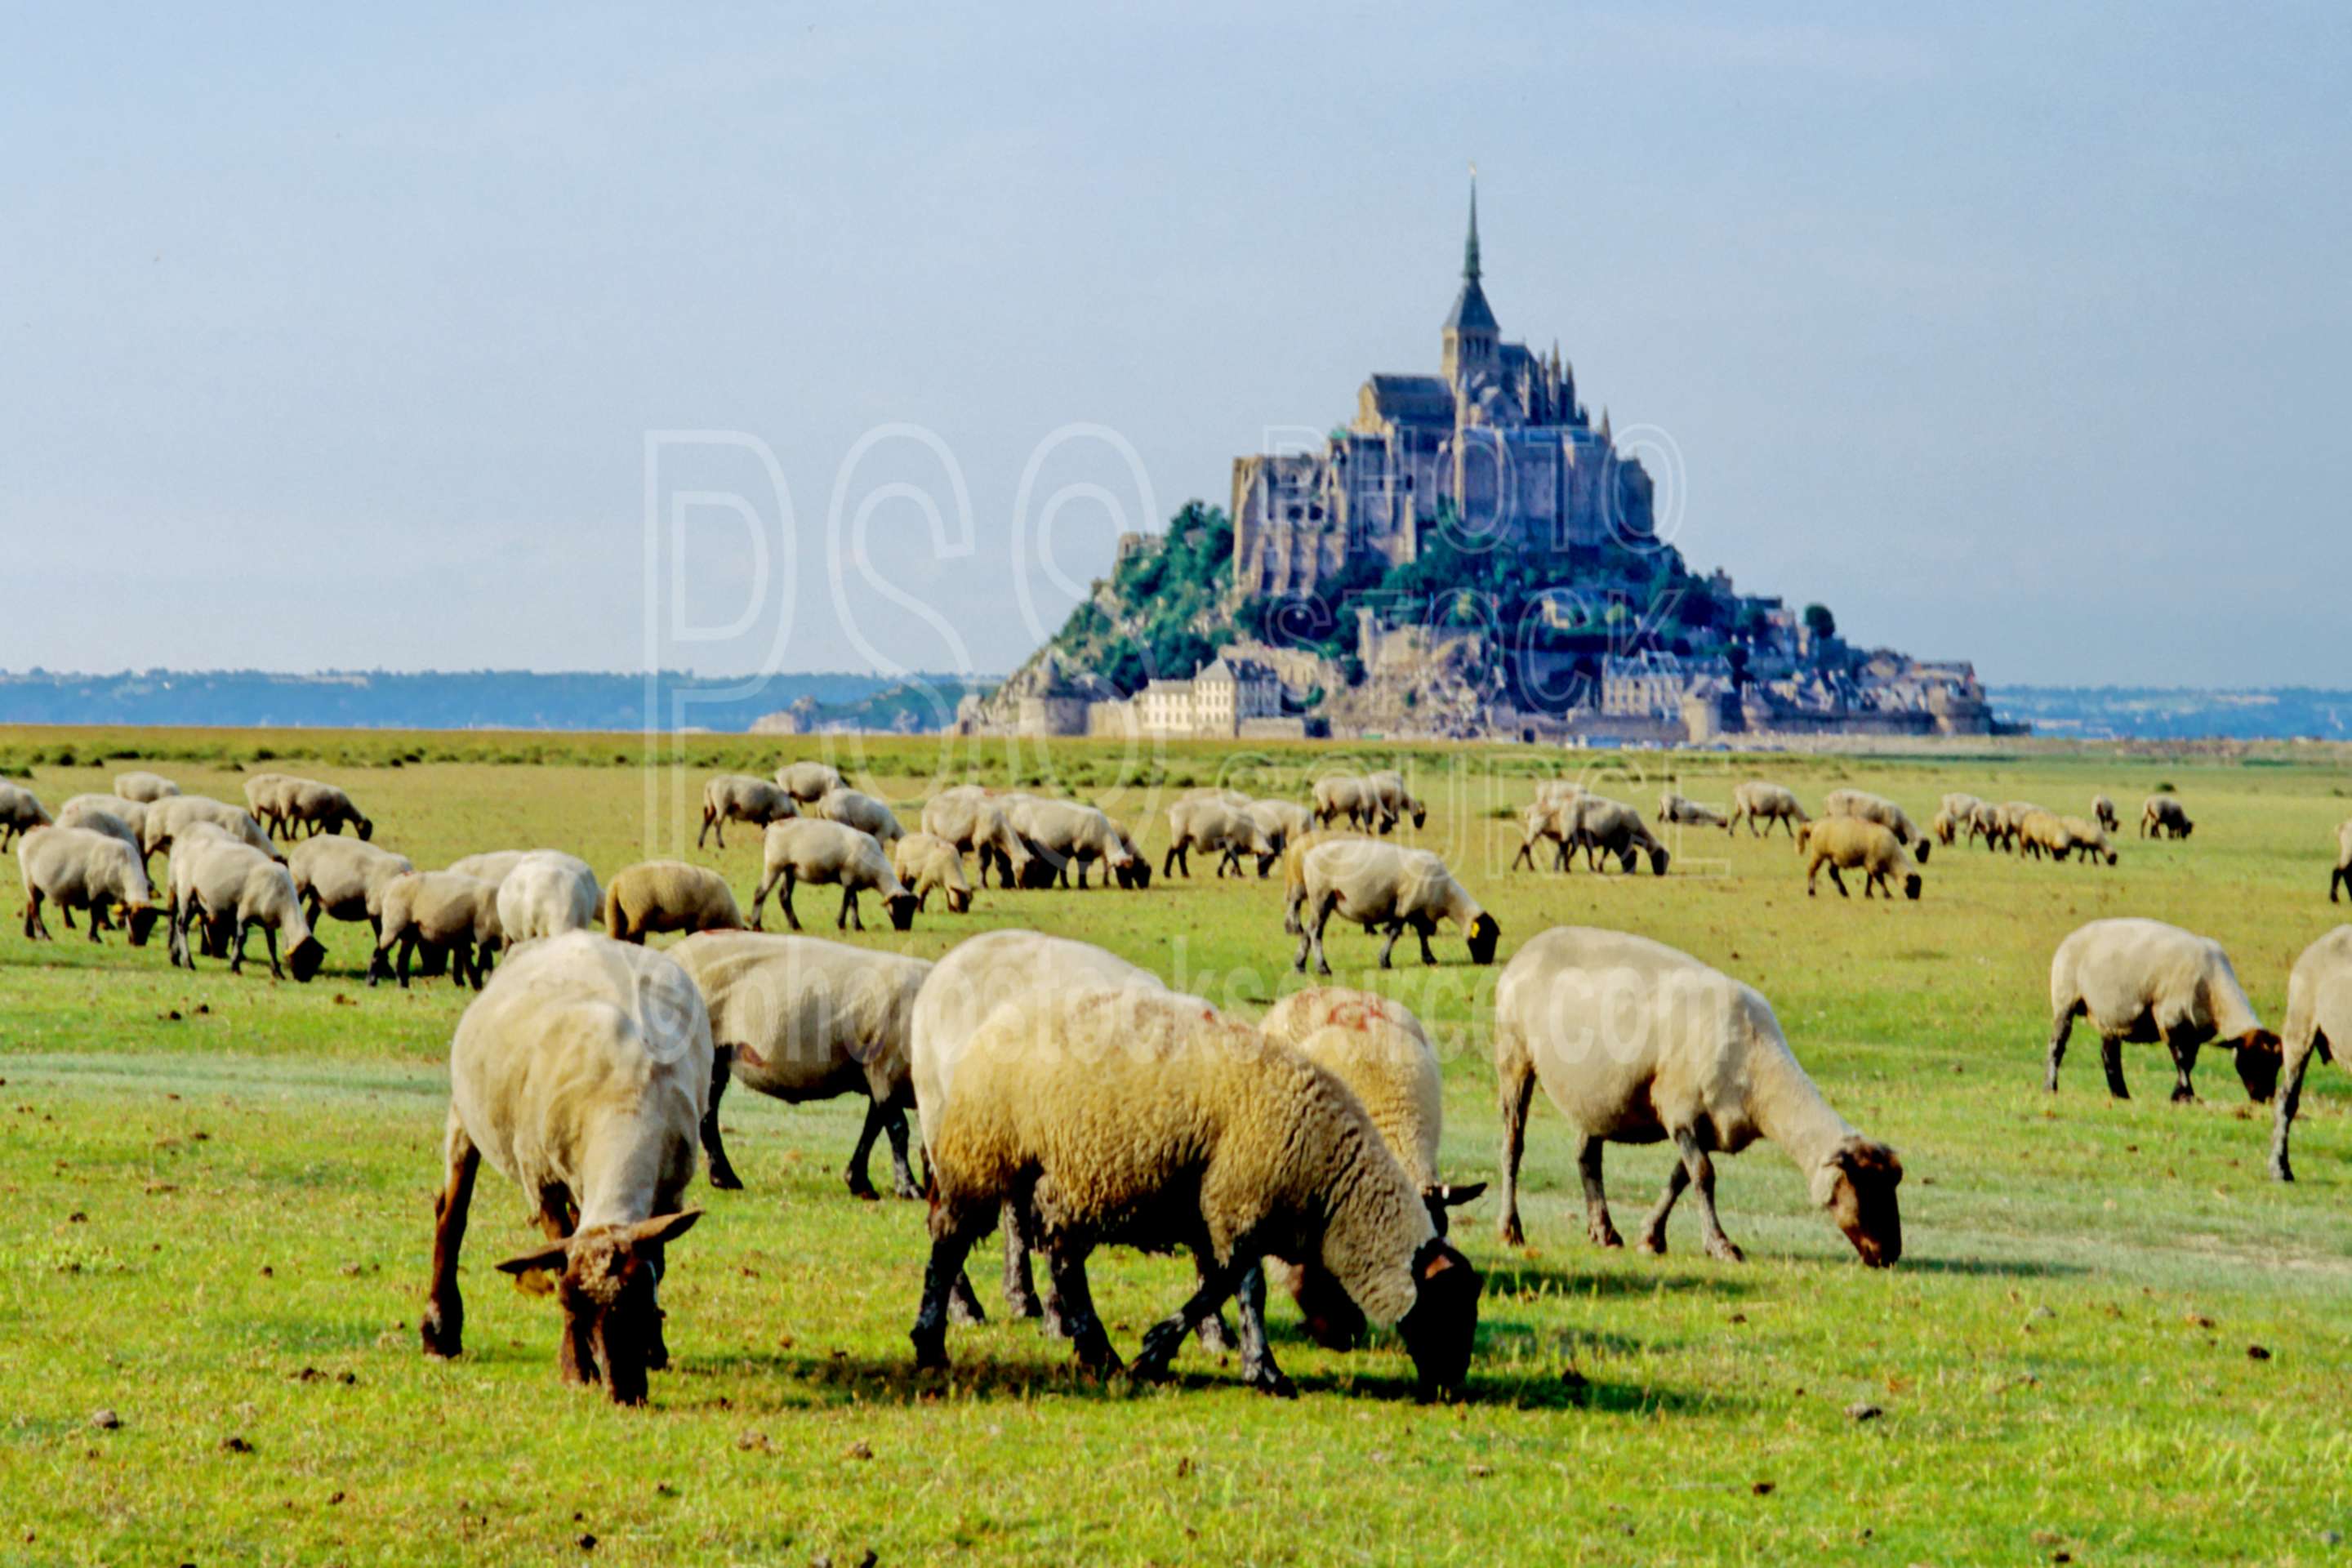 Mont Saint Michel,castle,europe,island,salt flat,sheep,walled city,cities,castles